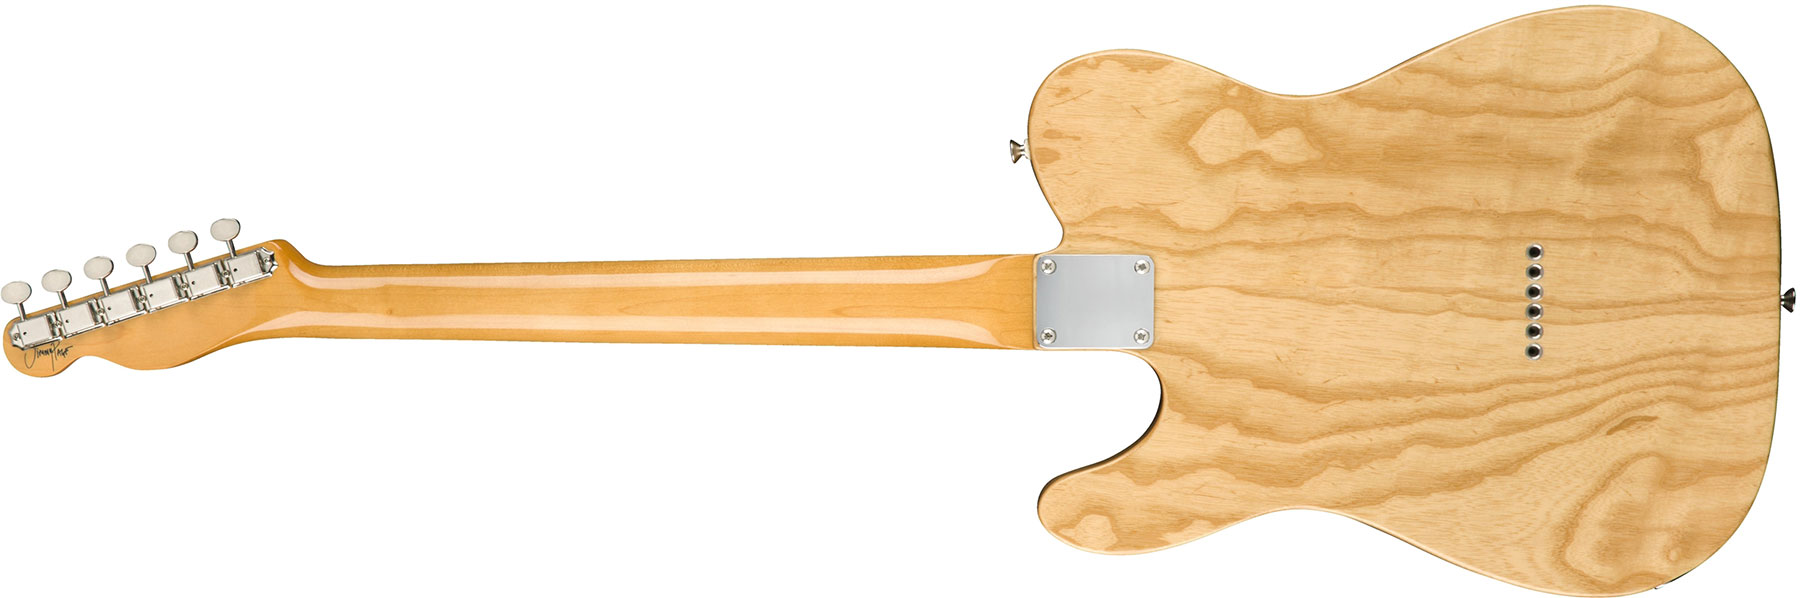 Fender Jimmy Page Tele Dragon Ltd Mex Signature Rw - Natural - Tel shape electric guitar - Variation 1